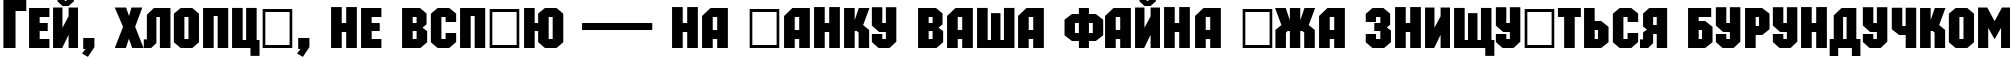 Пример написания шрифтом a_MachinaOrtoCaps Bold текста на украинском